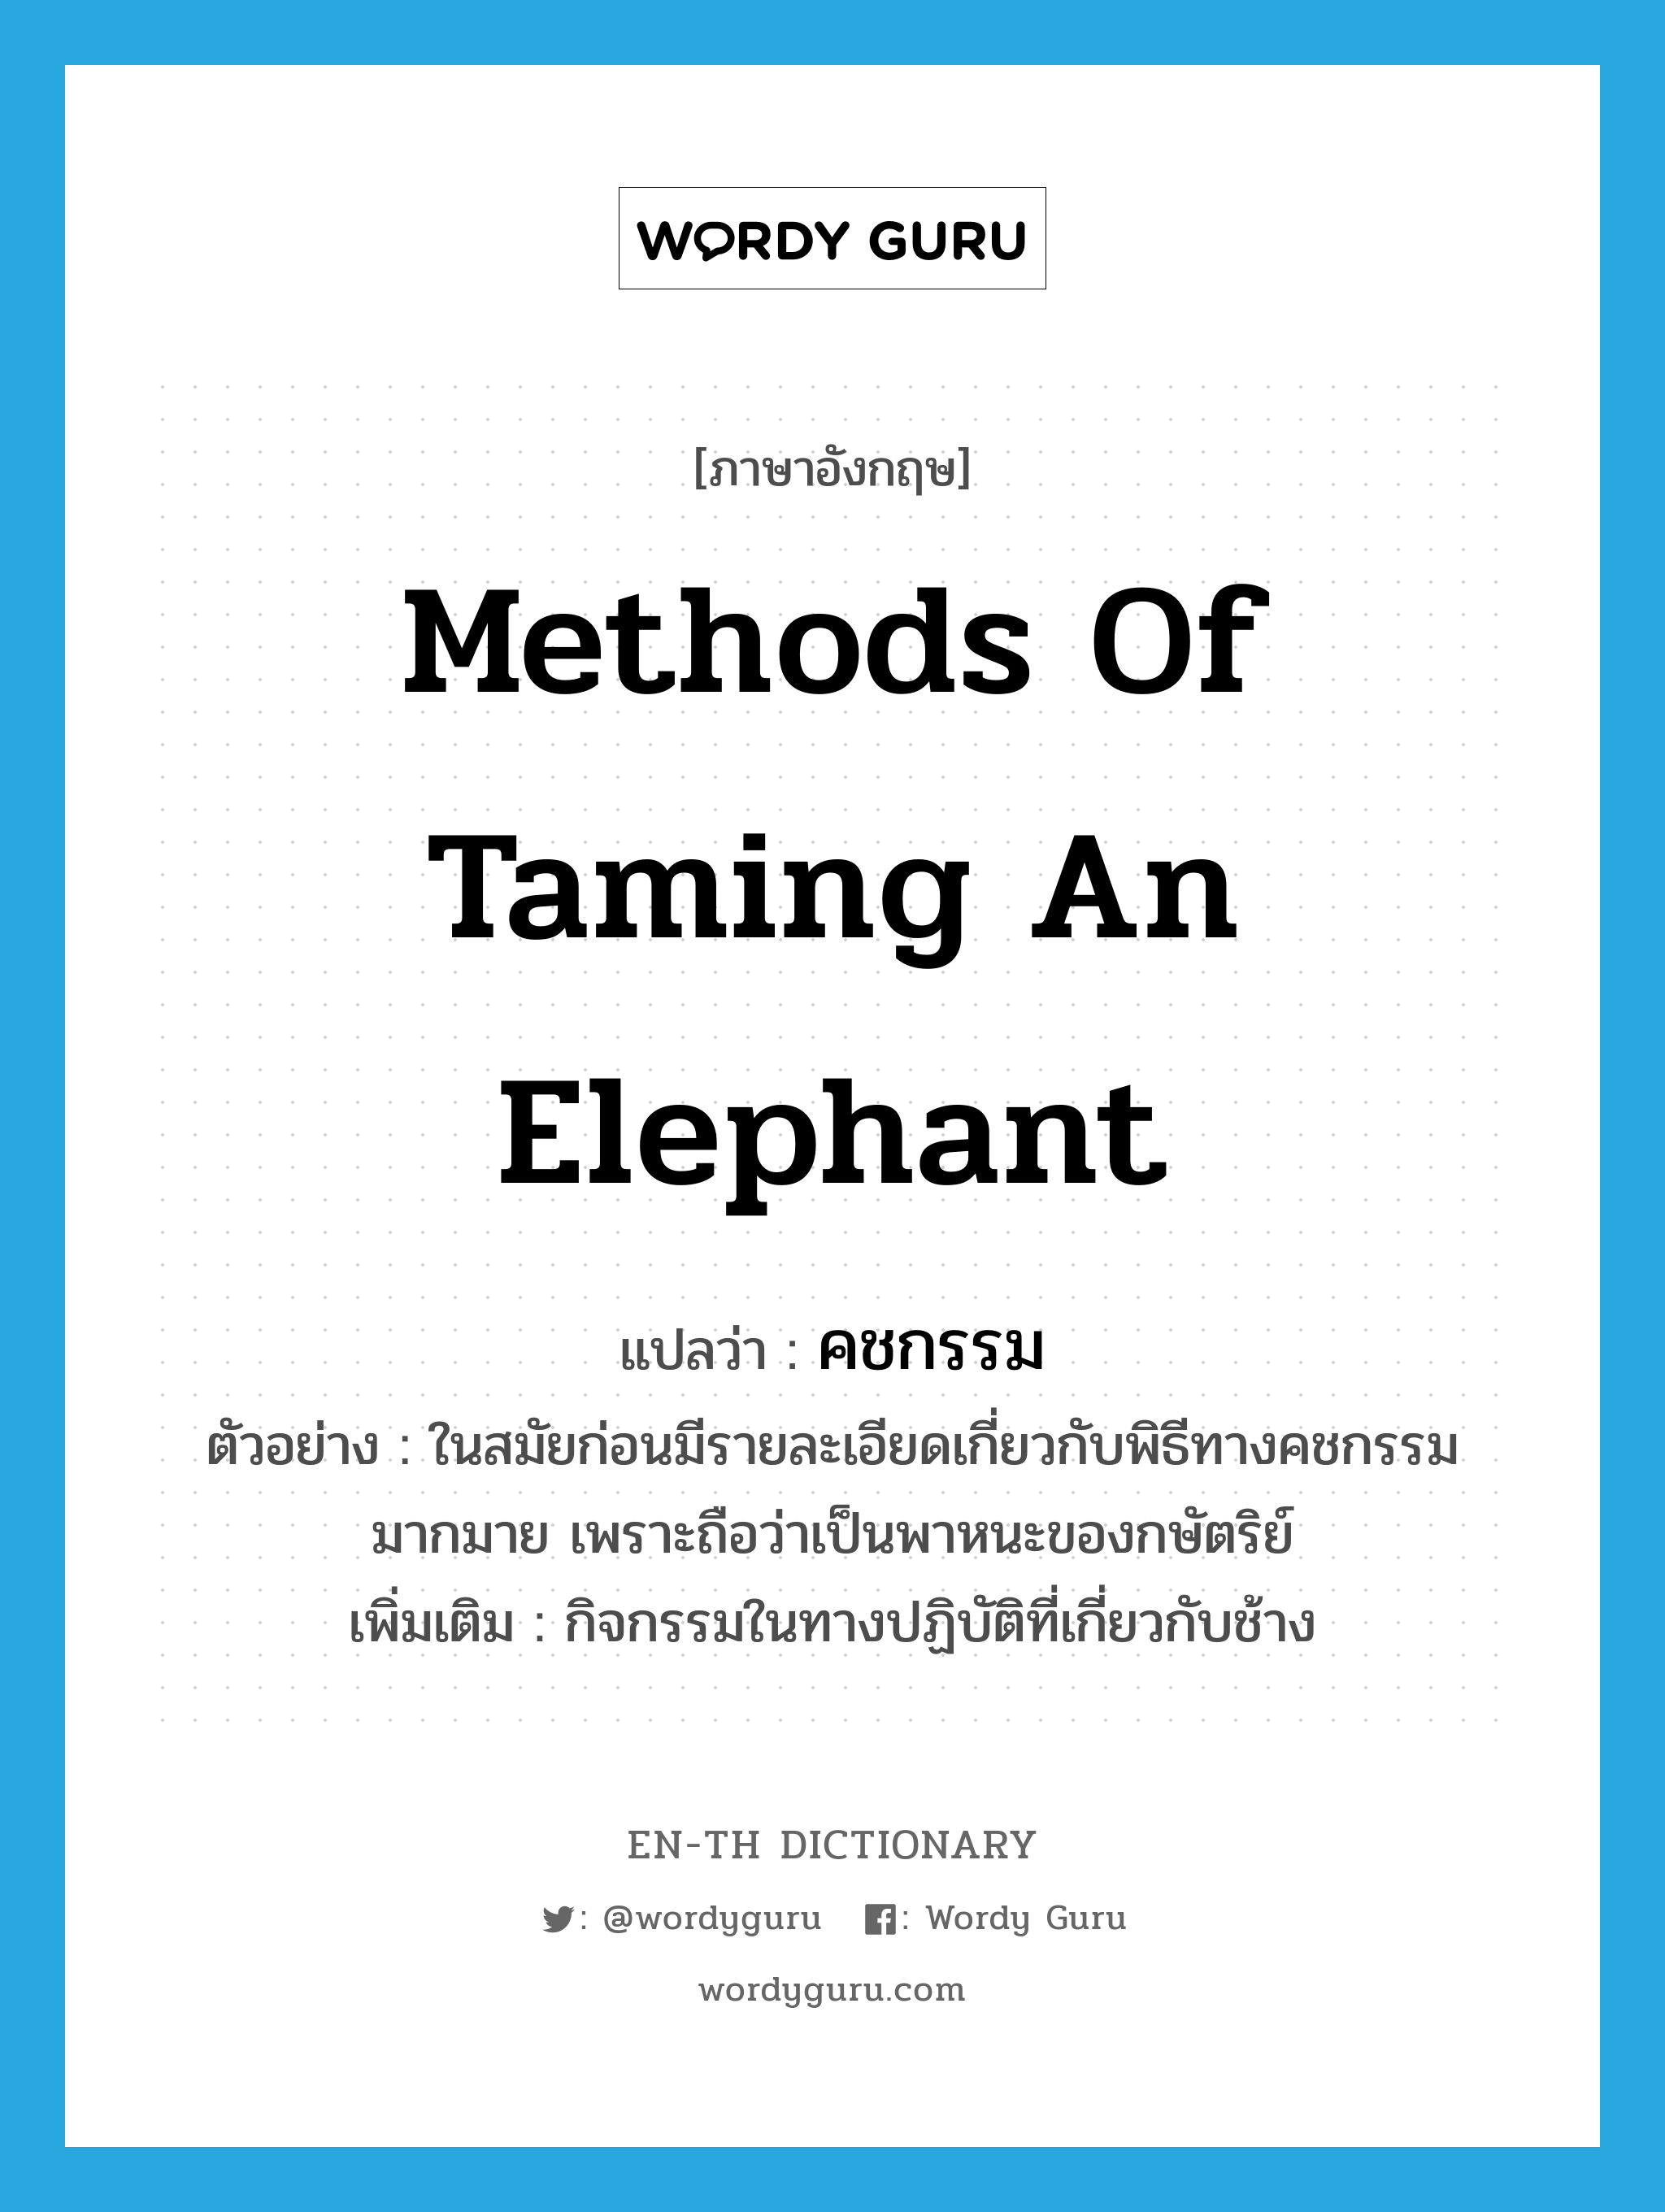 methods of taming an elephant แปลว่า?, คำศัพท์ภาษาอังกฤษ methods of taming an elephant แปลว่า คชกรรม ประเภท N ตัวอย่าง ในสมัยก่อนมีรายละเอียดเกี่ยวกับพิธีทางคชกรรมมากมาย เพราะถือว่าเป็นพาหนะของกษัตริย์ เพิ่มเติม กิจกรรมในทางปฏิบัติที่เกี่ยวกับช้าง หมวด N